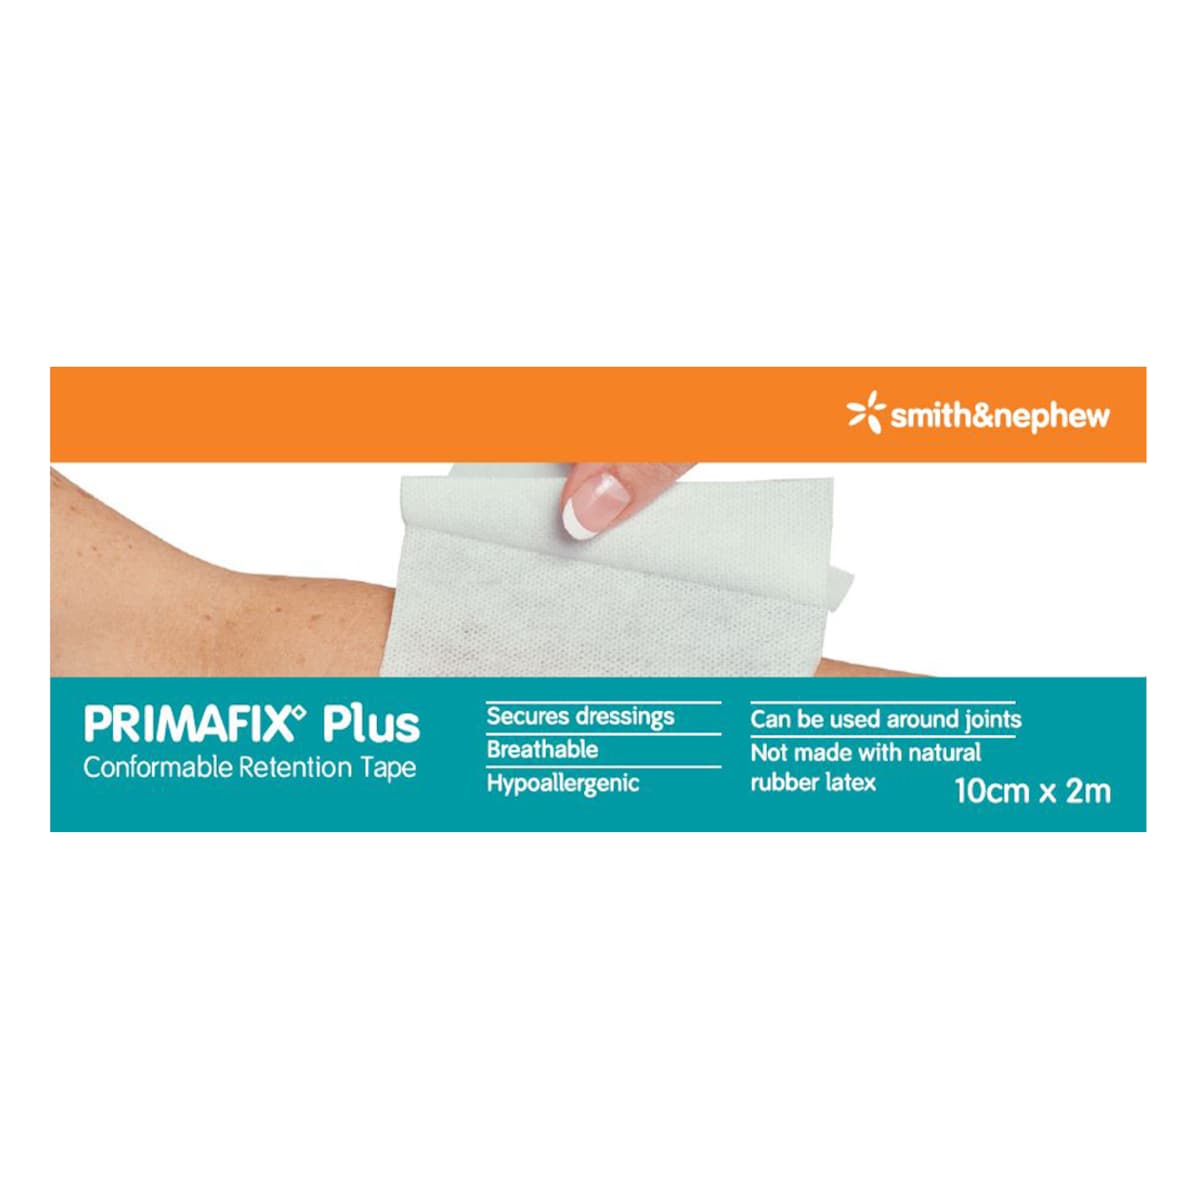 Primafix Plus Conformable Retention Tape 10cm x 2m by Smith & Nephew